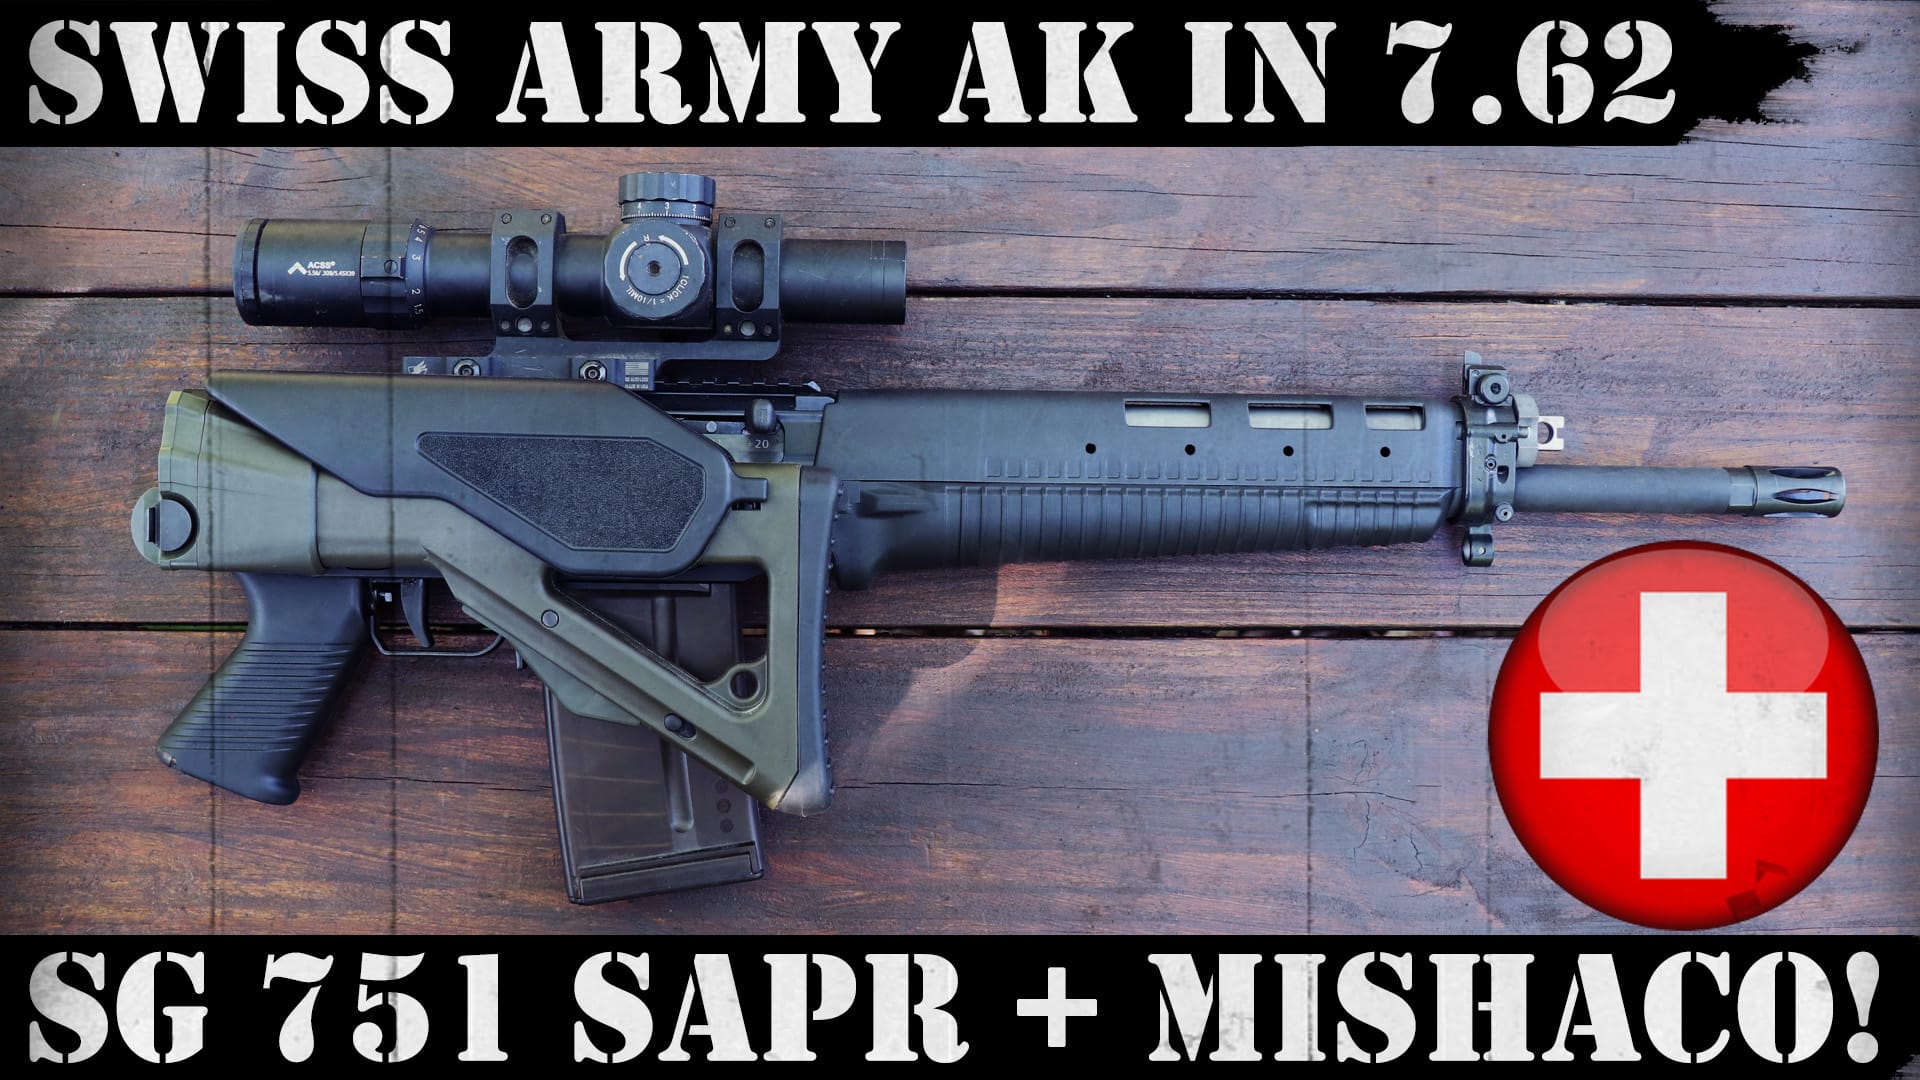 SWISS ARMY AK in 7.62×51 – SG 751 SAPR with Mishaco!